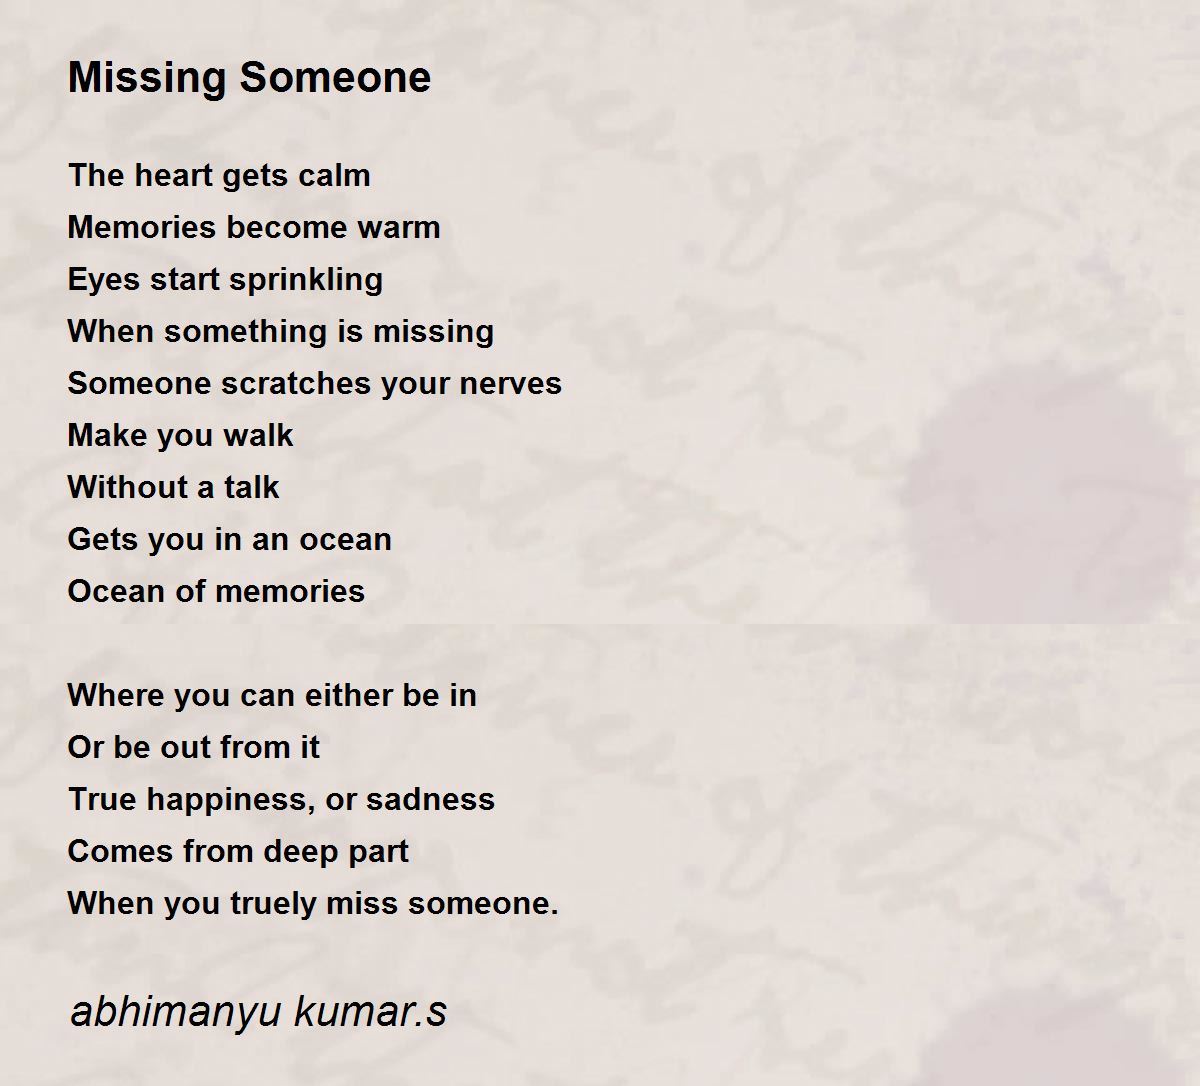 Missing Someone - Missing Someone Poem by abhimanyu kumar.s